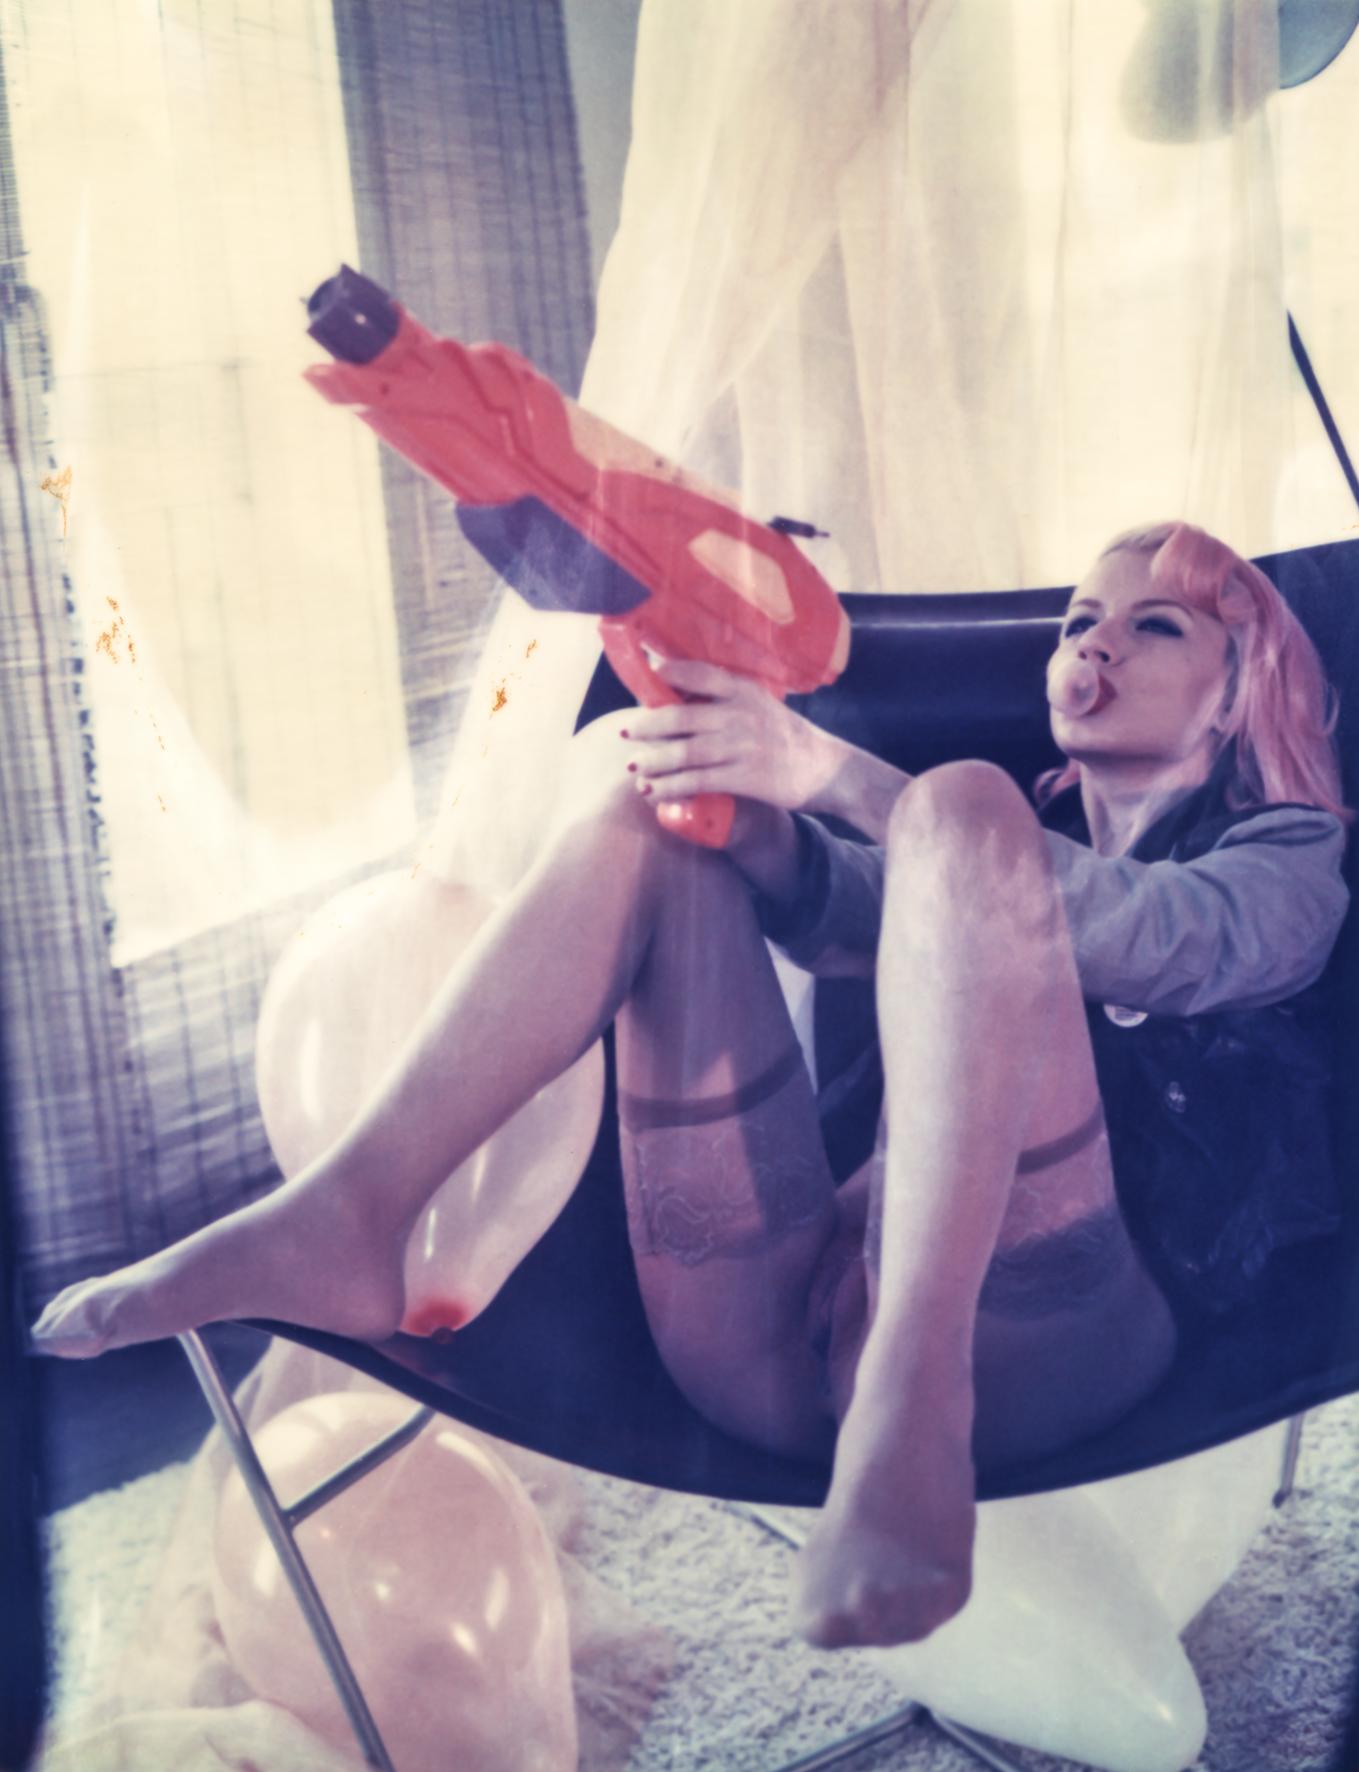 Carmen de Vos Color Photograph – Bubble Gun #04 [Odd Stories] - Nackt, Polaroid, Fotografie, Zeitgenössisch